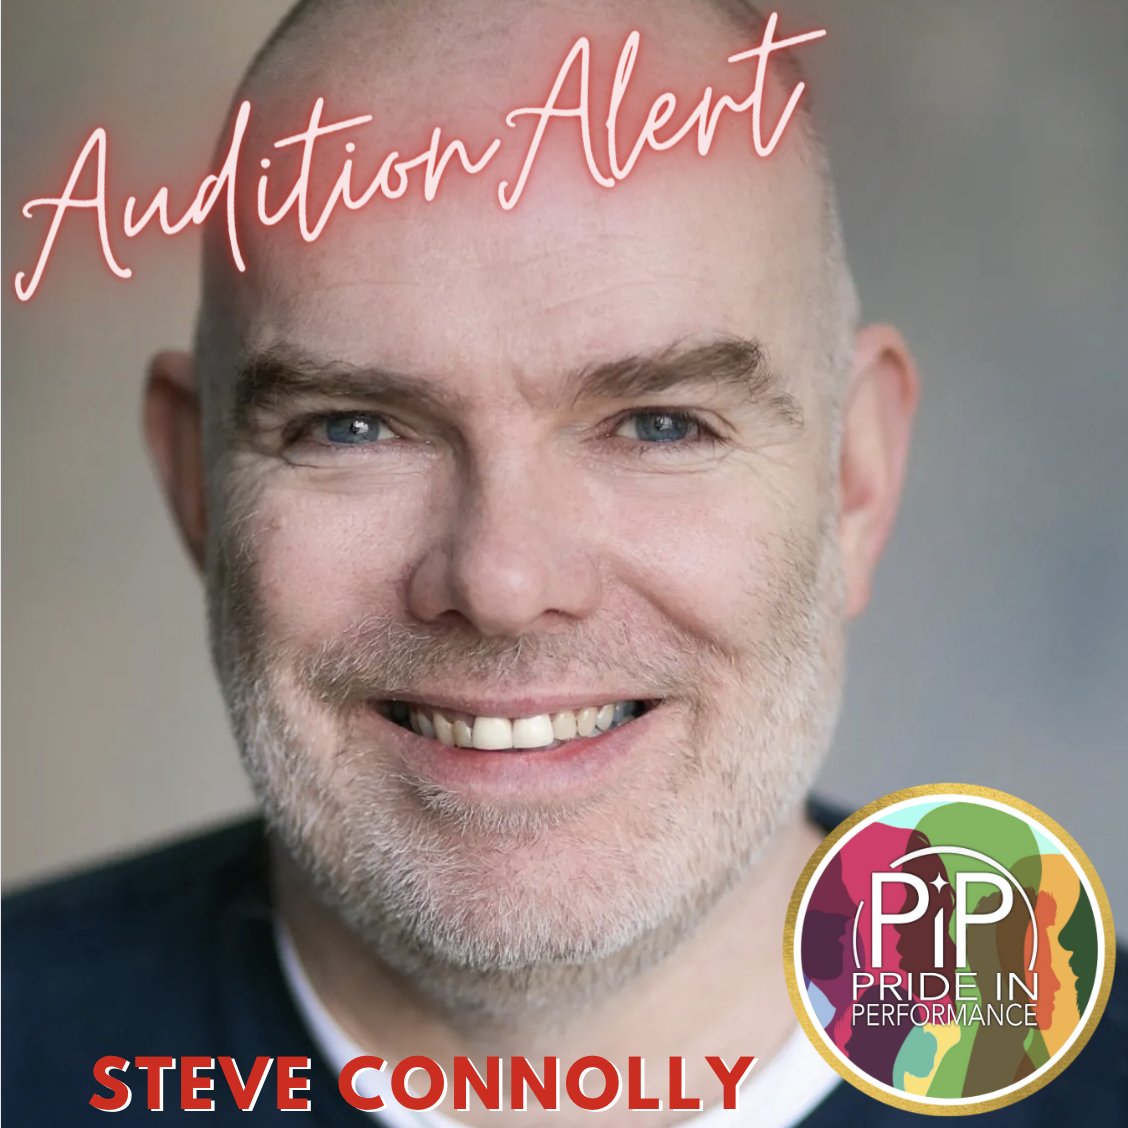 🚨 Audition Alert For STEVE CONNOLLY 🚨
@ConnollyActor enjoying a lovely #SelfTape #Casting for a #FeatureFilm 
spotlight.com/5415-8940-0169 
#PositivelyPiP 
#AuditionAlert 
#ActorsLife